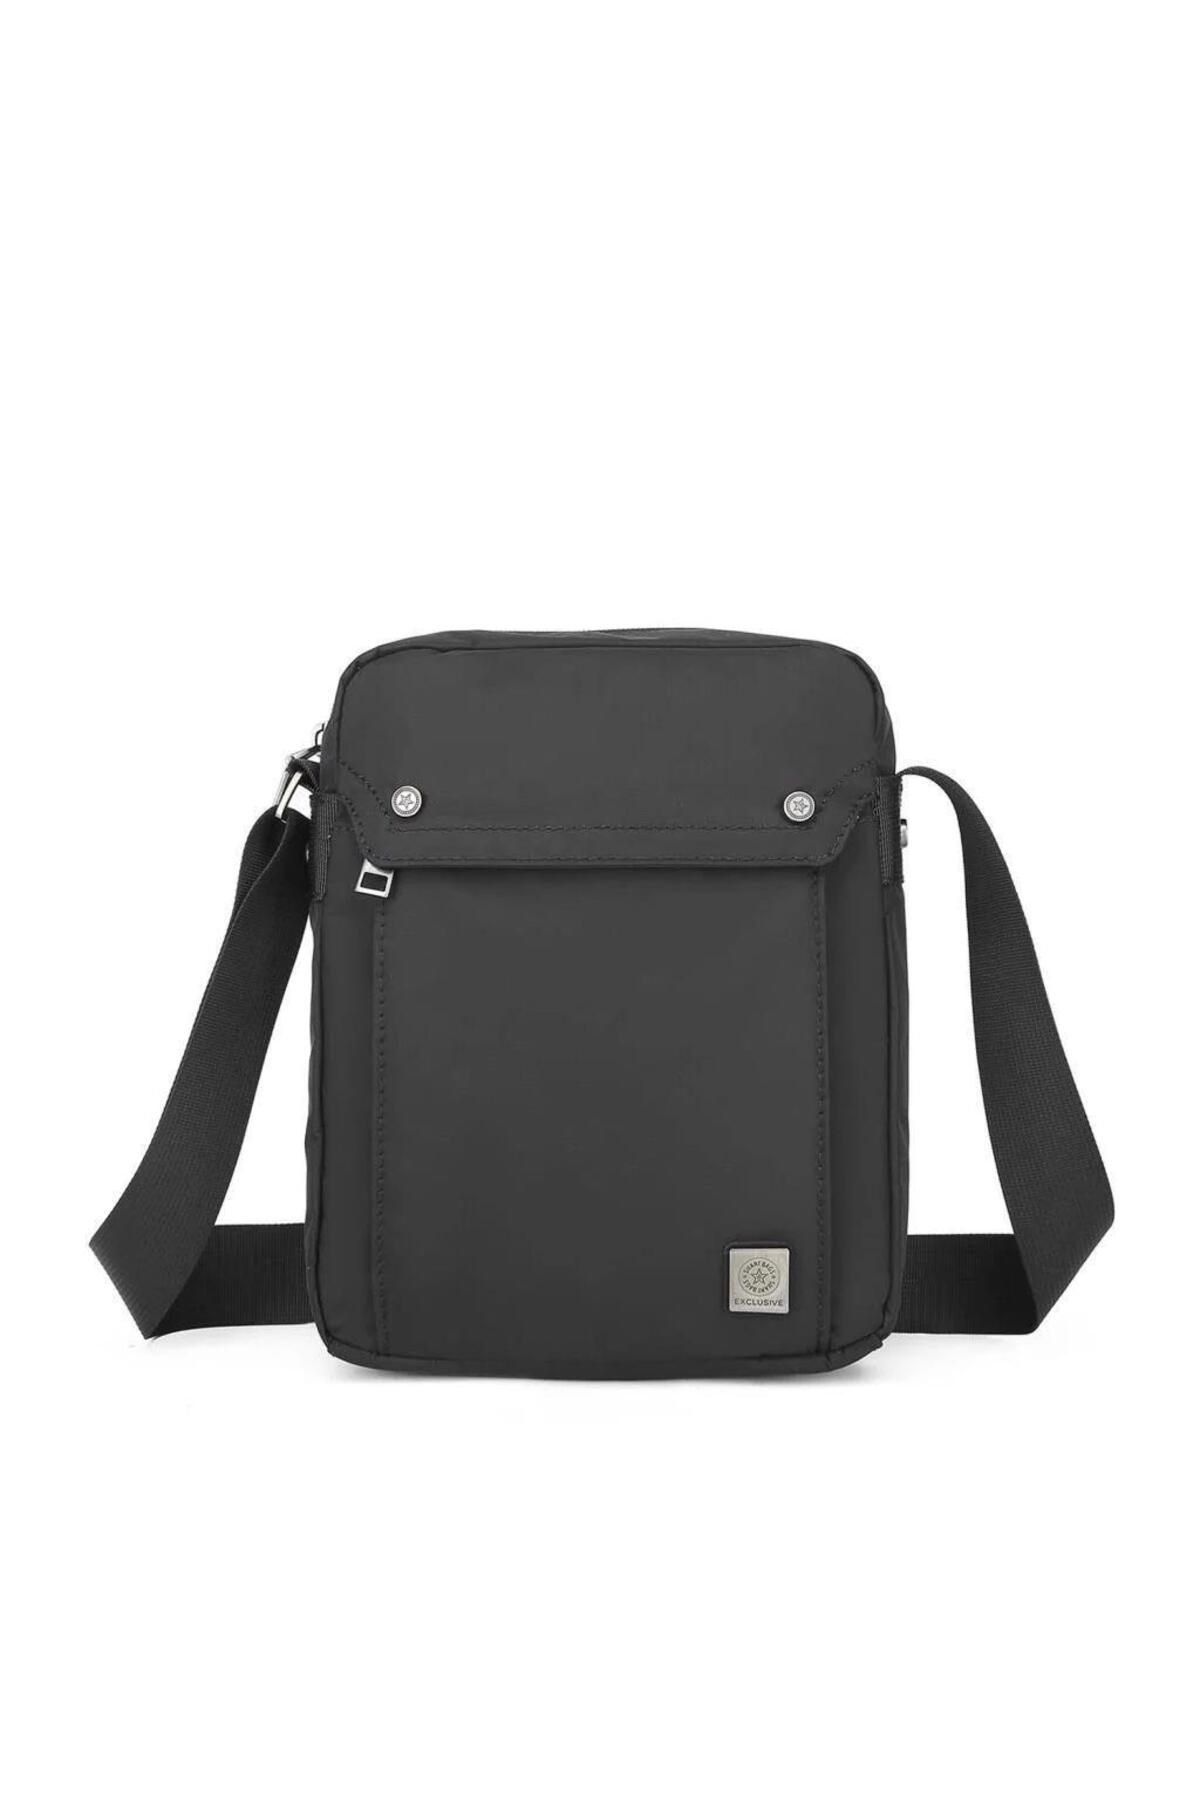 Smart Bags 8700 Çapraz Çanta Siyah